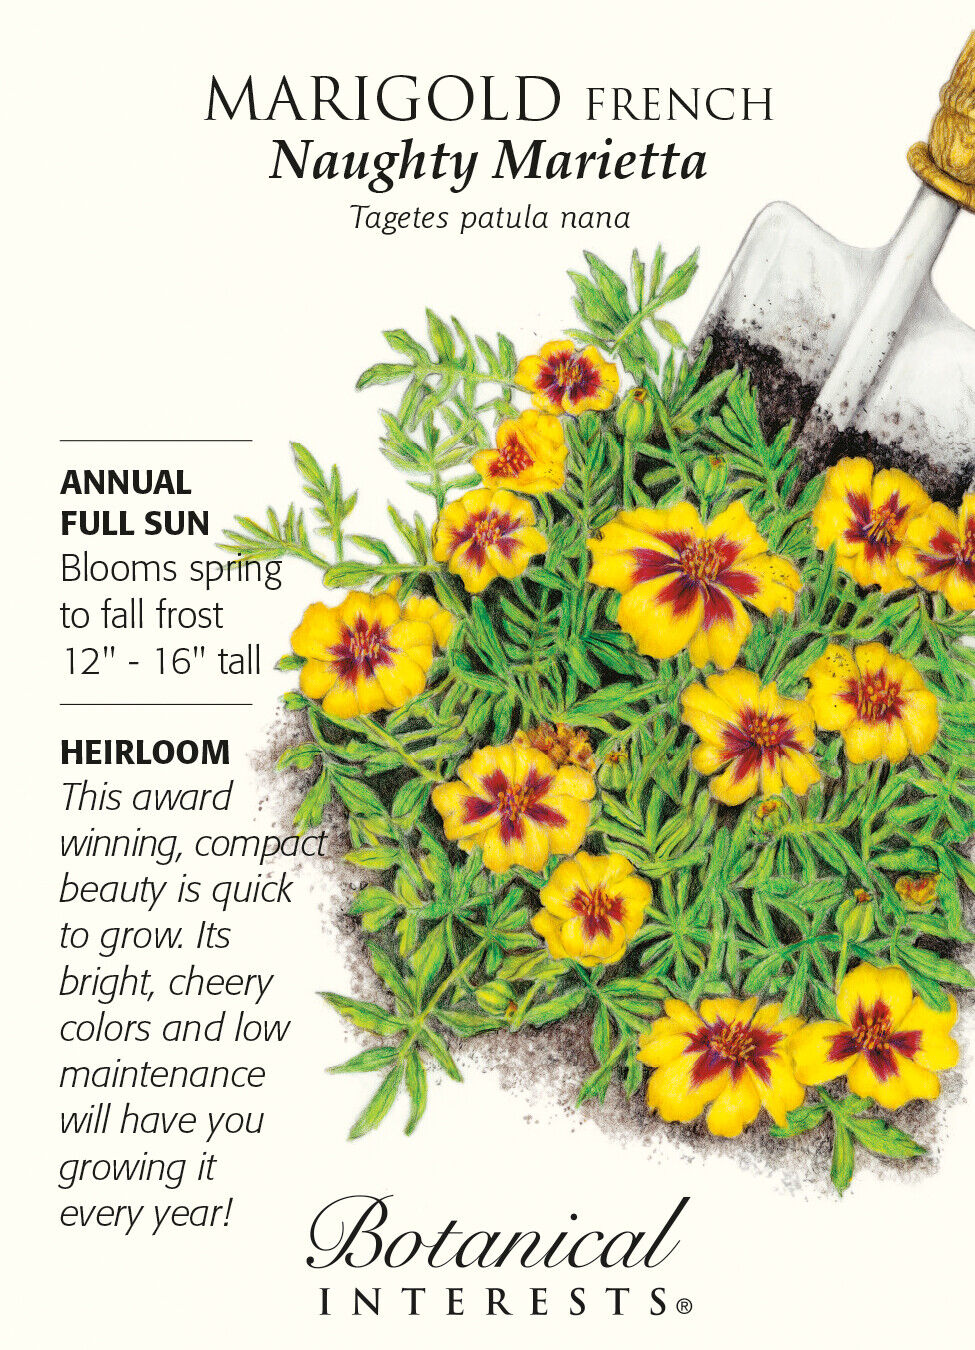 Naughty Marietta French Marigold Seeds - 500 mg - Botanical Interests